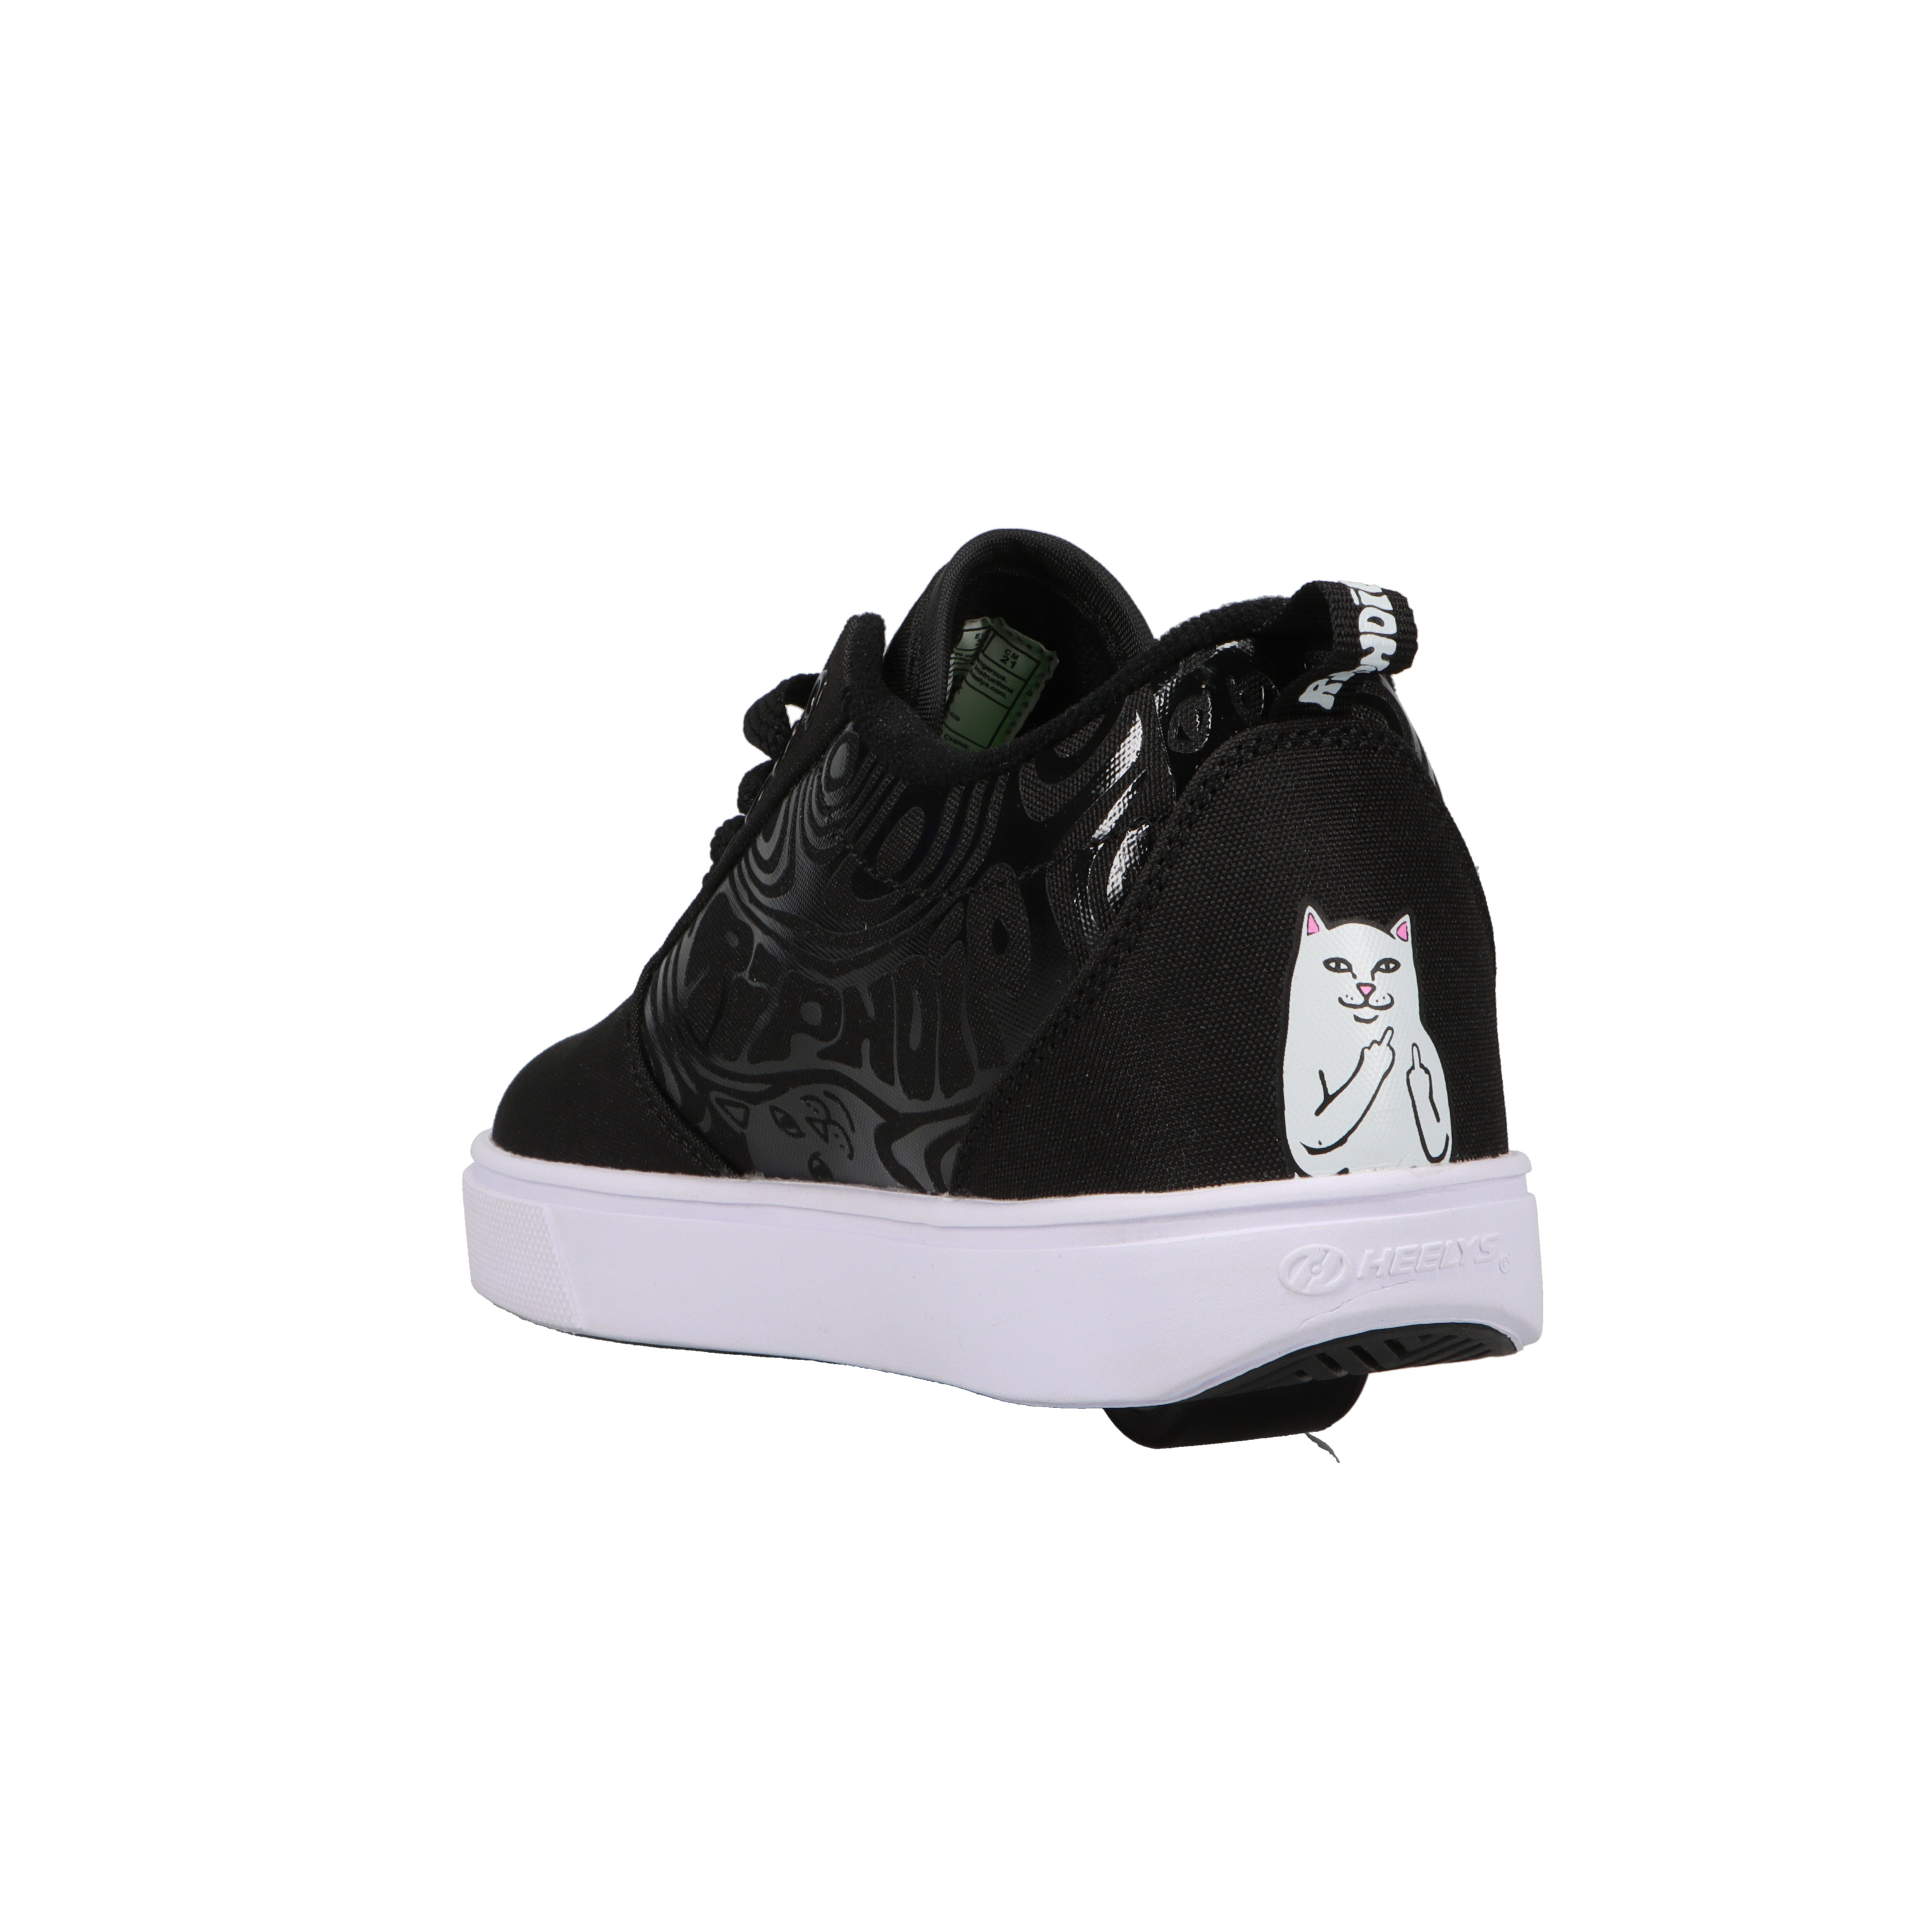 RIPNDIP Pro 20 Heelys Shoes (Black)